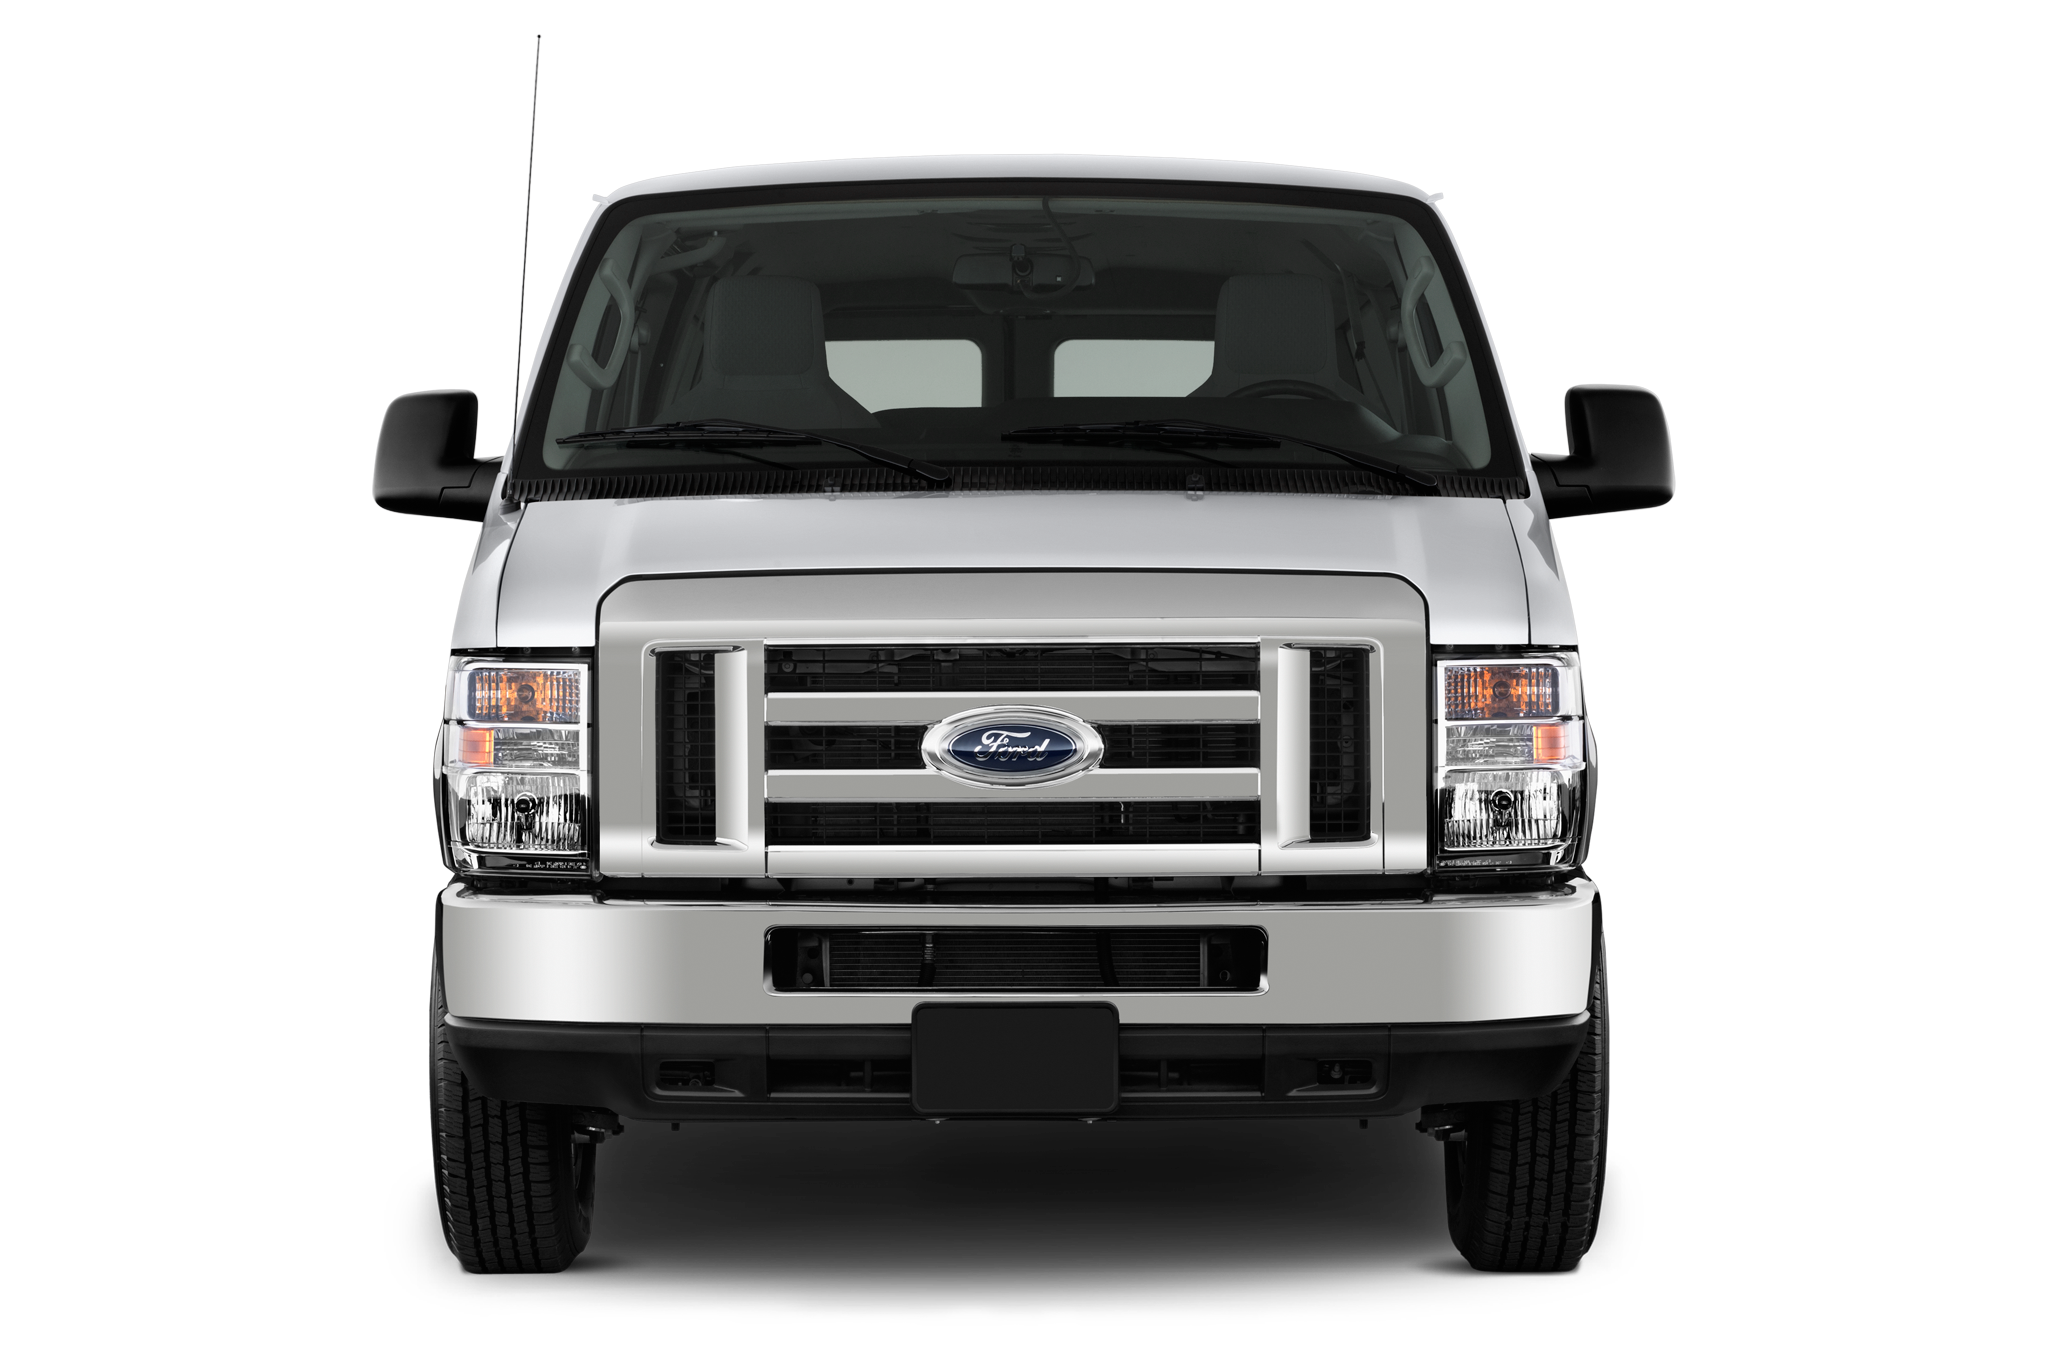 Ford E Series Econoline Wagon E-150 XL 2010 - International Price & Overview